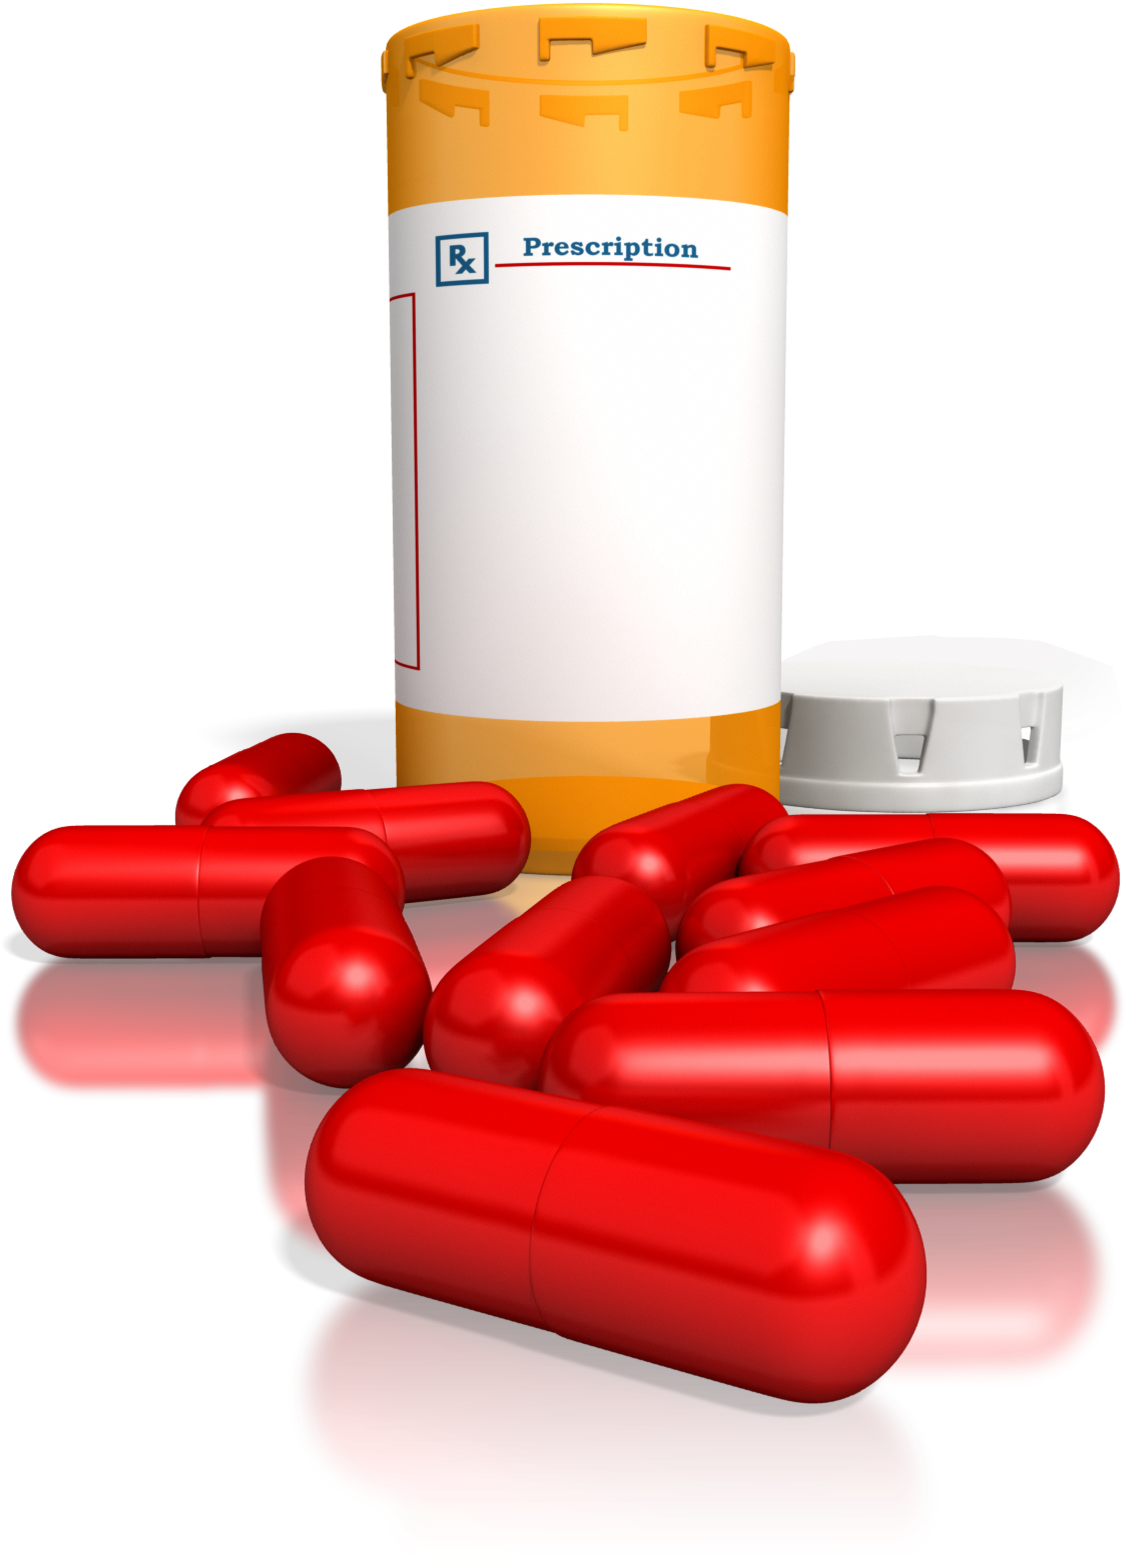 Prescription Medication Bottleand Red Capsules